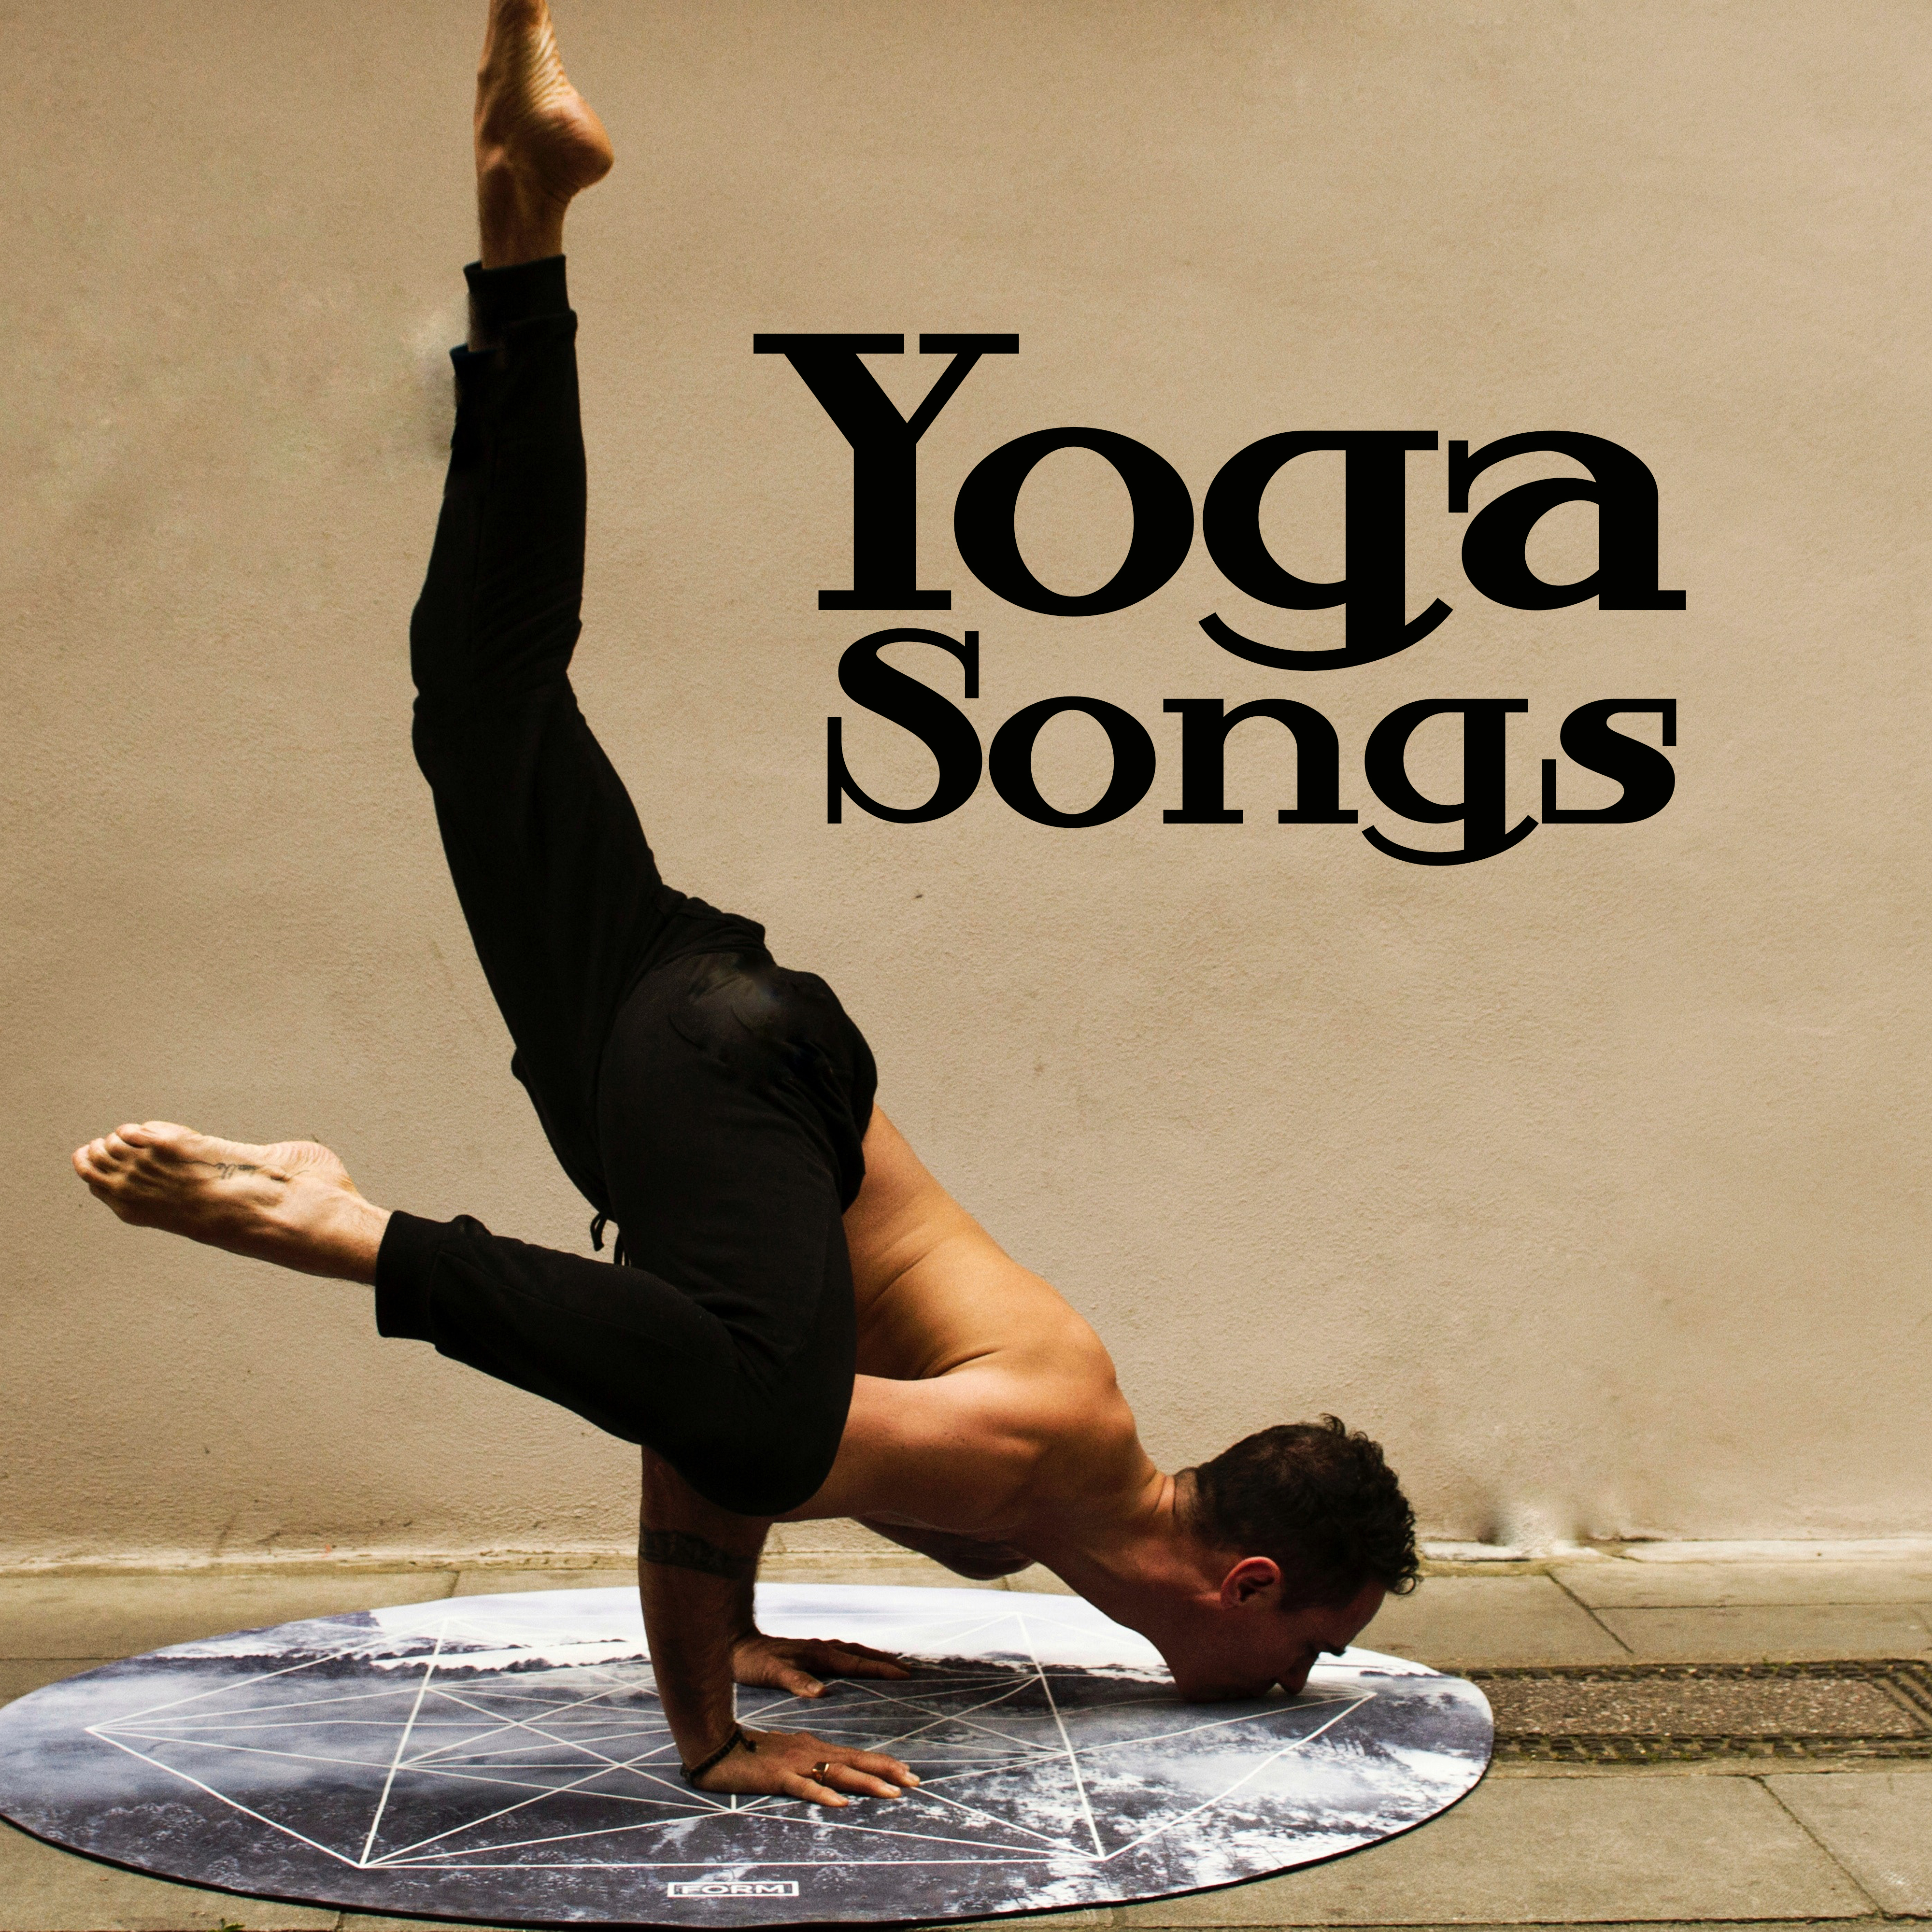 Yoga Songs – French Songs, Yoga Practice, Meditation Music, Zen Relaxation